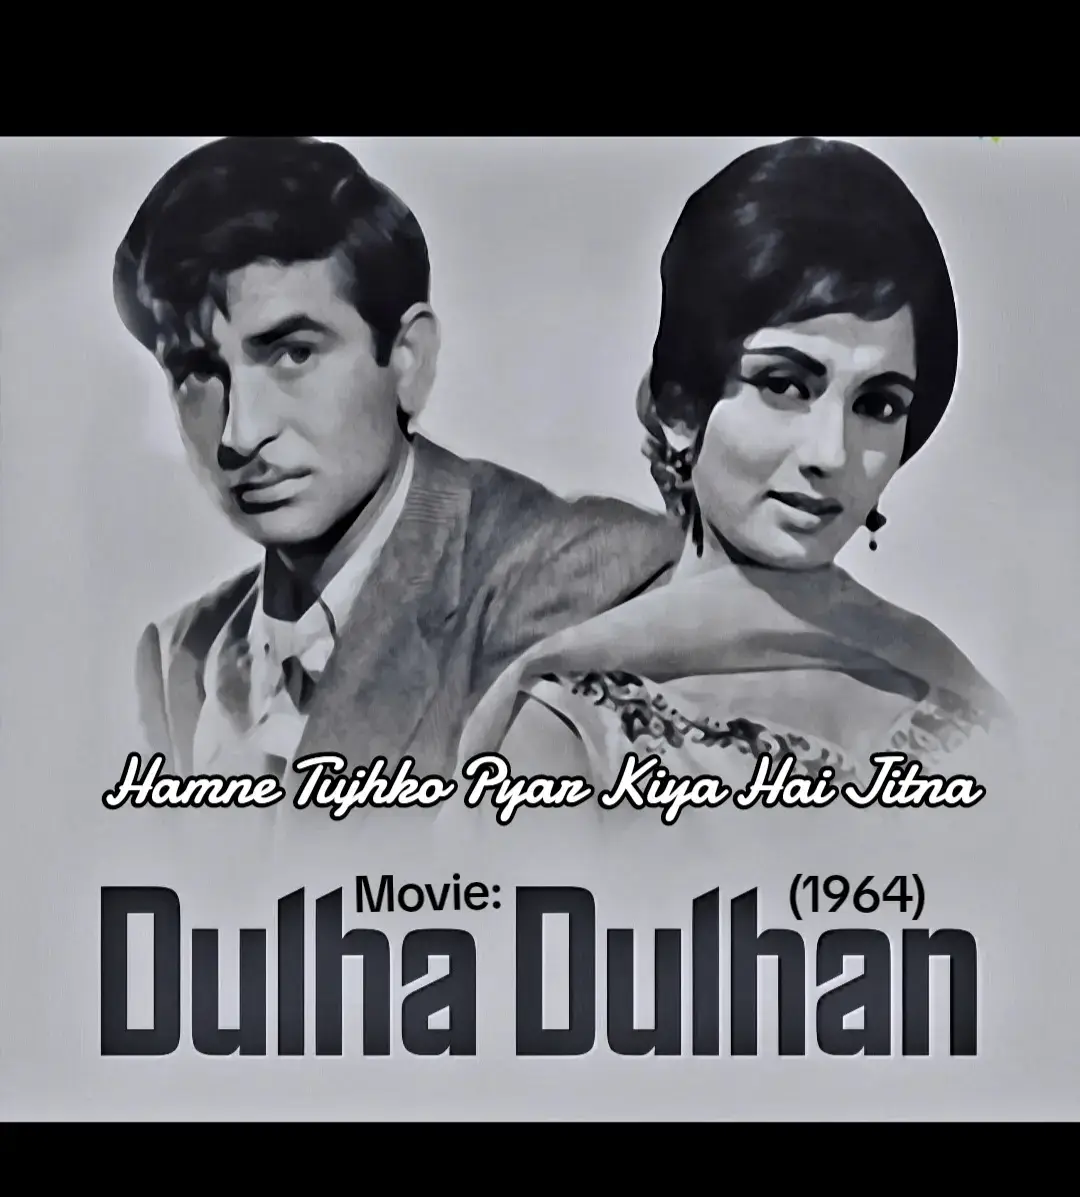 #Song : Hamne Tujhko Pyar Kiya Hai Jitna, #Film : Dulha Dulhan 1963, #Singer : Mukesh, #Music #Director : Kalyanji-Anandji, #Lyricist : lndiwar #Star, #cast : Raj Kapoor, Sadhana, Agha, K.N. Singh, Raj Mehra, Madhumati, Anwari Bai... #100k #1million #sohanpardesi007 #romanticsong #deartiktokteambringmeonforyoupag #bollywoodsongs #bollywood #movie #film #old #oldisgold #forever #classic #timeless #legends #mohdrafin #kishorkumar #song #sung #50s #60s #70s #80s #90s #fyp #fypシ #fyp #fypシ #fypツ゚ #fypジ #fypシ゚viral #fypソ #fypシ #viral #trendingvideo #foryourpag #foryou #viralvideos #tiktokcreator  #millionviews #500kviwes #500k #followers #tiktokusa #usa  #plzunfrezmyaccount🙏🙏foryoumyaccount  #unfreezemyacount  #foryoumyaccount  #thankyou #tiktokindia #punjab #tiktokcanada🇨🇦 #italy #Belgium #france #paris #london ##Toronto #Vancouver #punjabi #punja   #tiktokaustralia🇦🇺 #tiktoknepal🇳🇵 #tiktoknewzealand🇳🇿 #tiktokuk🇬🇧 #tiktikdubai🇵🇸 #saudiarabia #europe #uk #pakistan #bangladesh #shrilank #dhaka #malaysia #Nepal #Qatar #Kuwait #Africa  #Amsterdam #Johannesburg #Birmingham #Karachi #Lahore   #trending #the #nature #fypシ゚viralシ #photography #buddha #fypシ゚ #viralシ #fypシ゚viral #fypシ゚viral🖤tiktok #fypシ゚ #musician #everyone #tiktokupdates #creatortips #tiktoktips #contentcreatortips #creatorsearchinsights #tiktoknews 